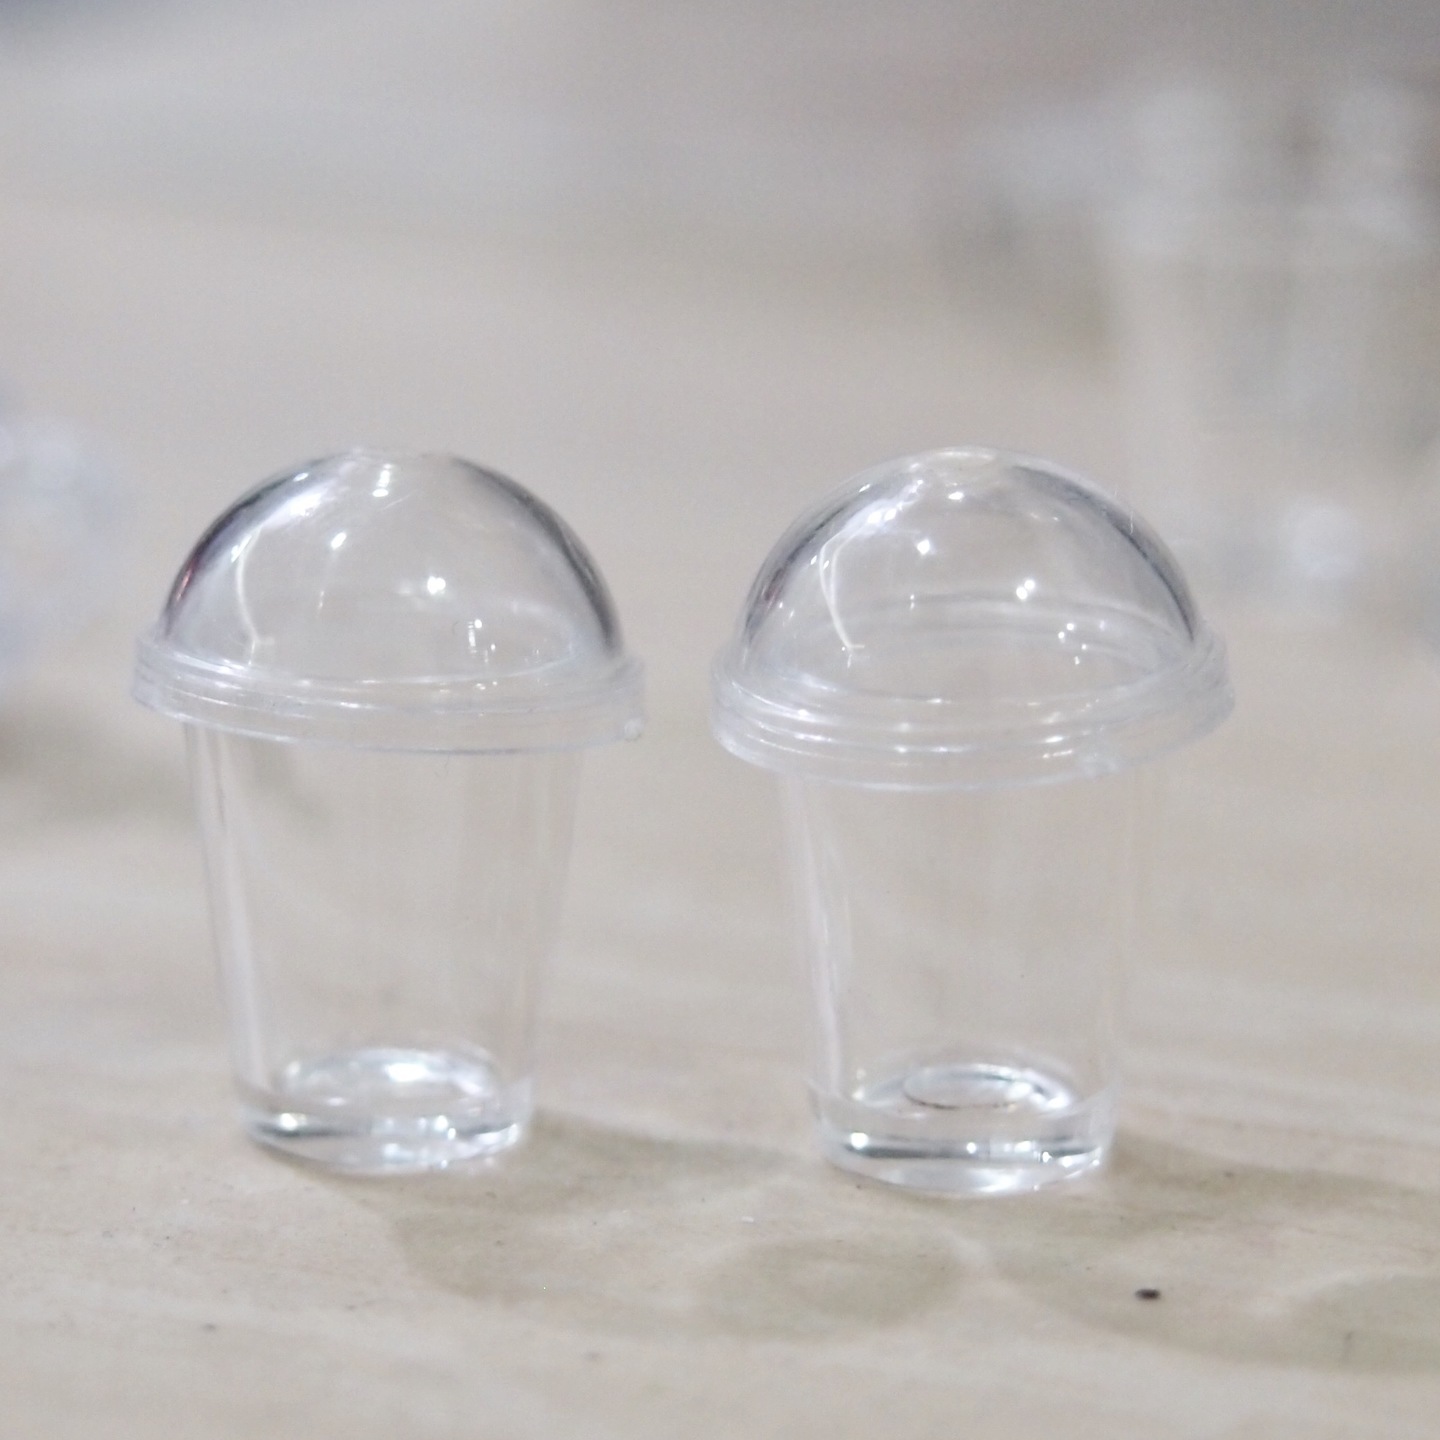 Dollhouse Miniature Cups-Bubble Tea cups